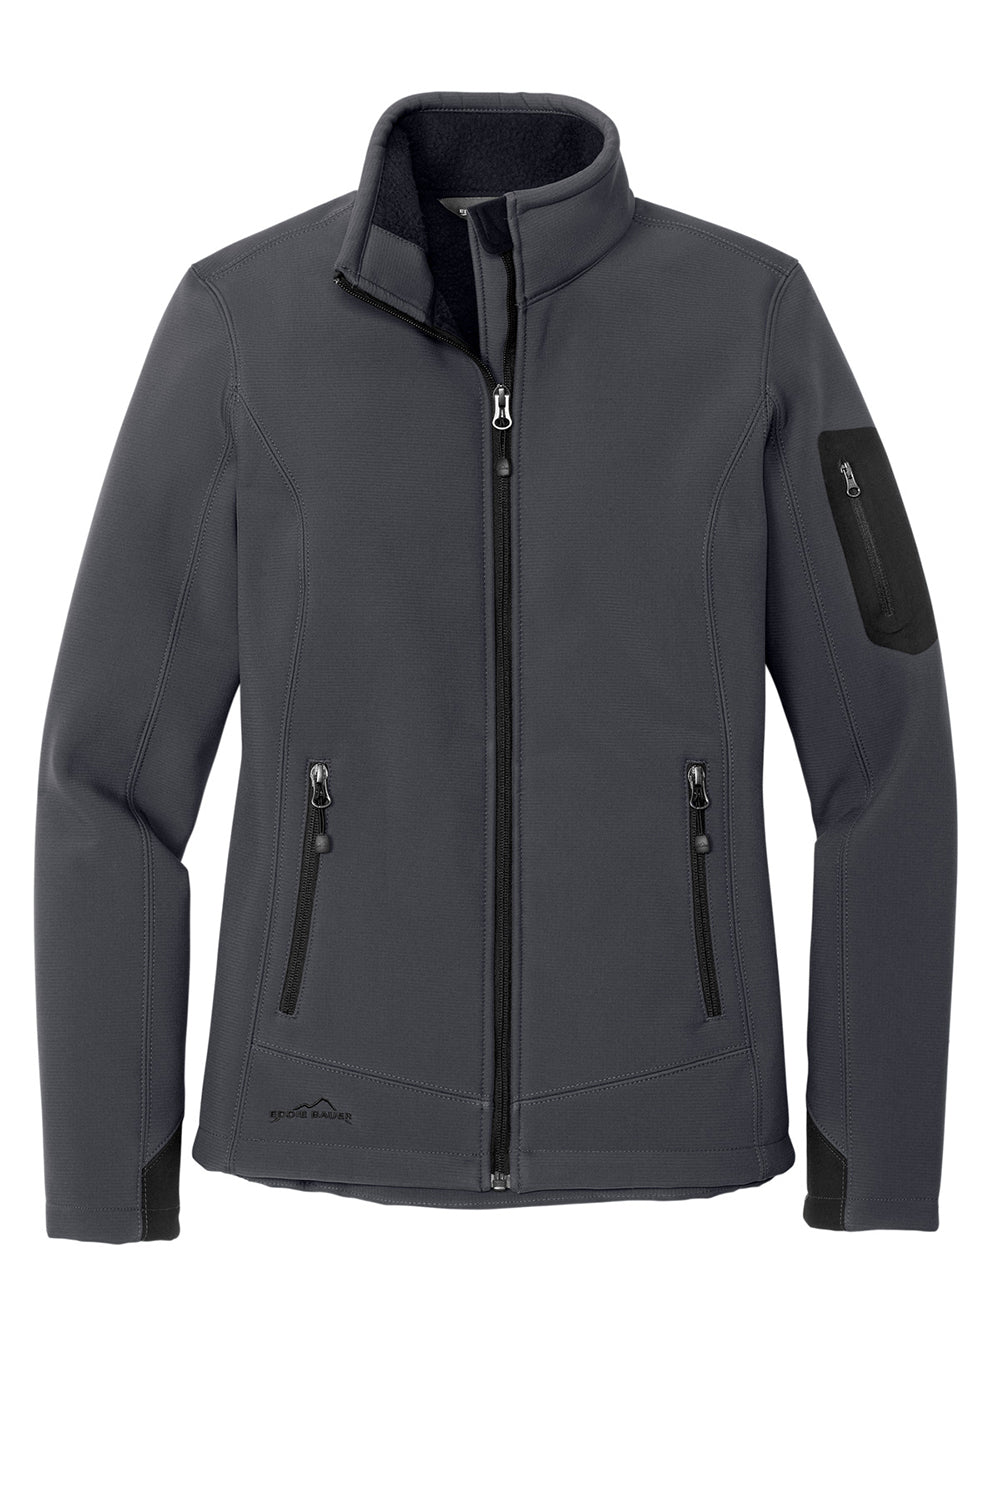 Eddie Bauer EB535 Womens Rugged Water Resistant Full Zip Jacket Steel Grey Flat Front